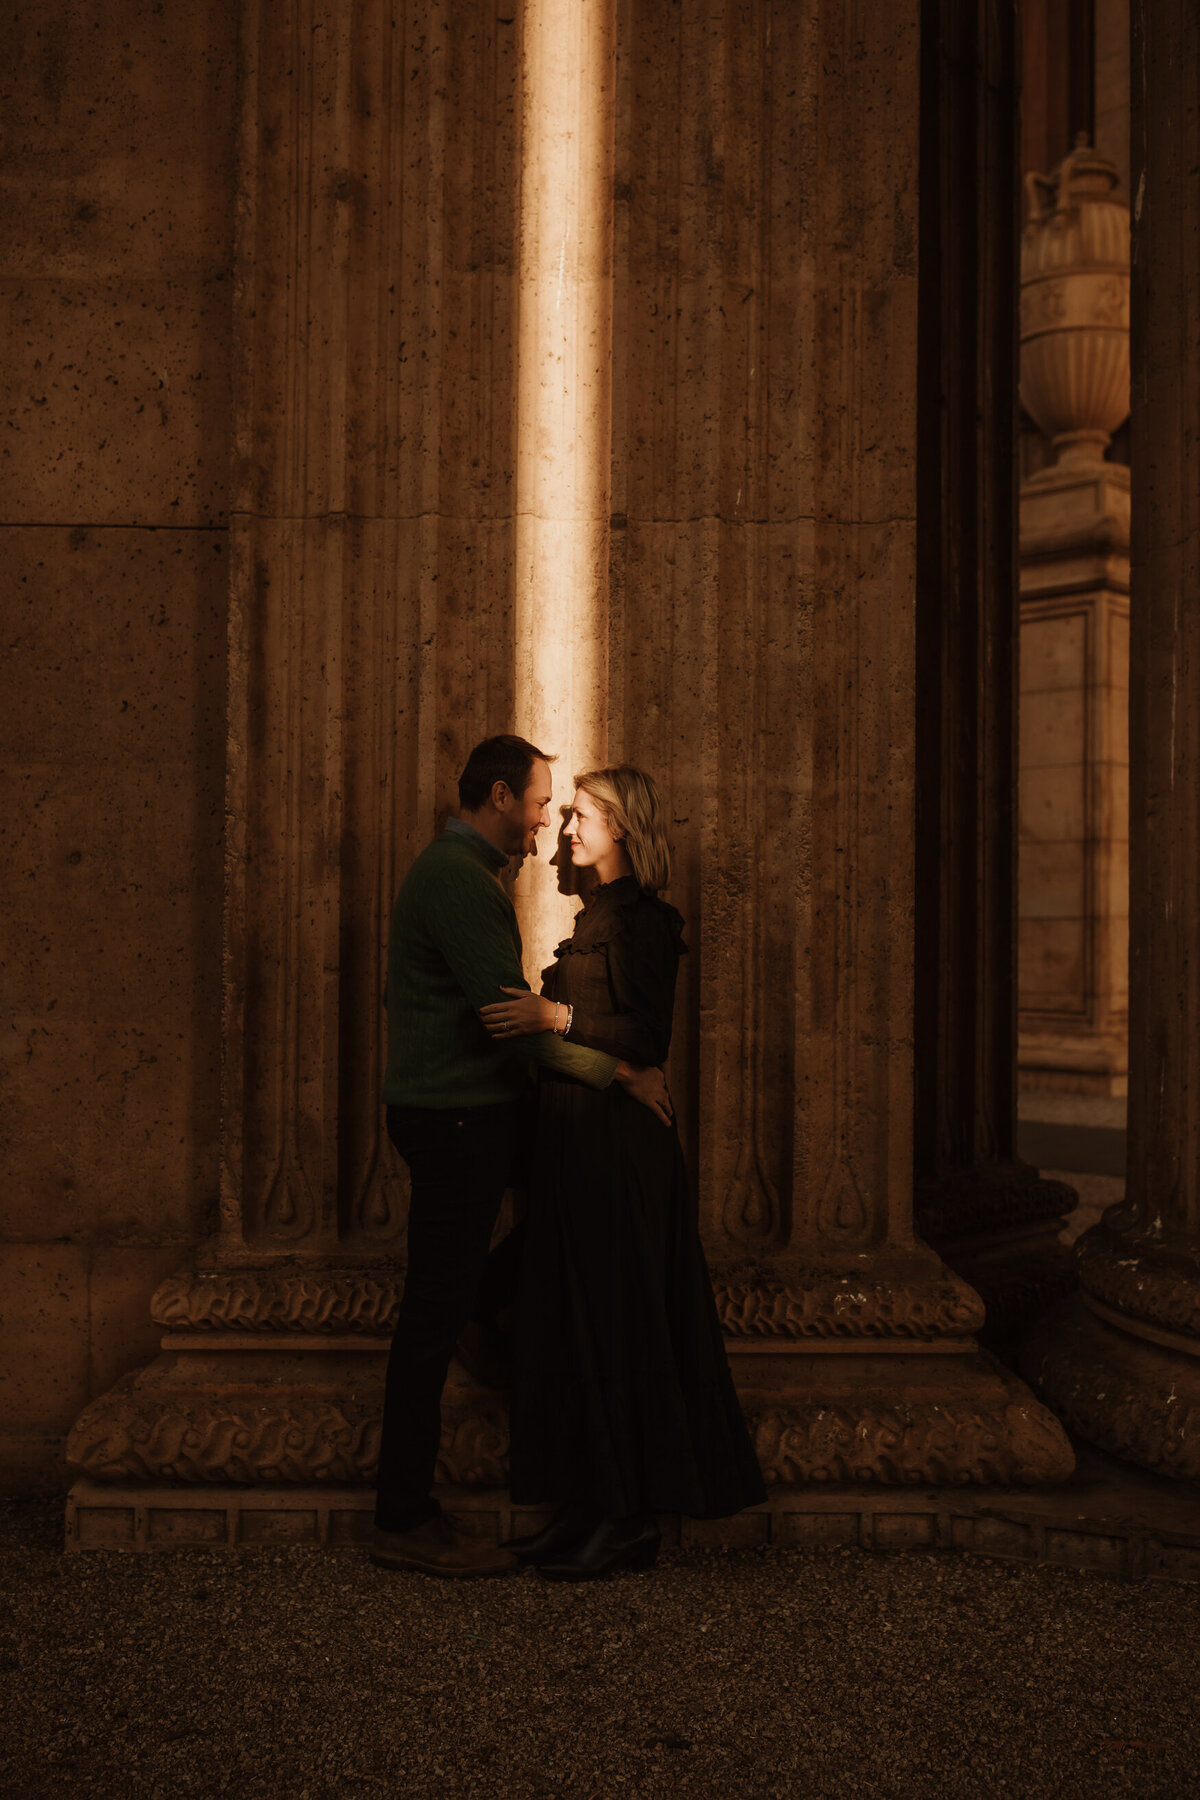 Bay Area couples portrait at Palace of Fine Arts.  Pocket of light illuminates them against Beaux-Arts architecture